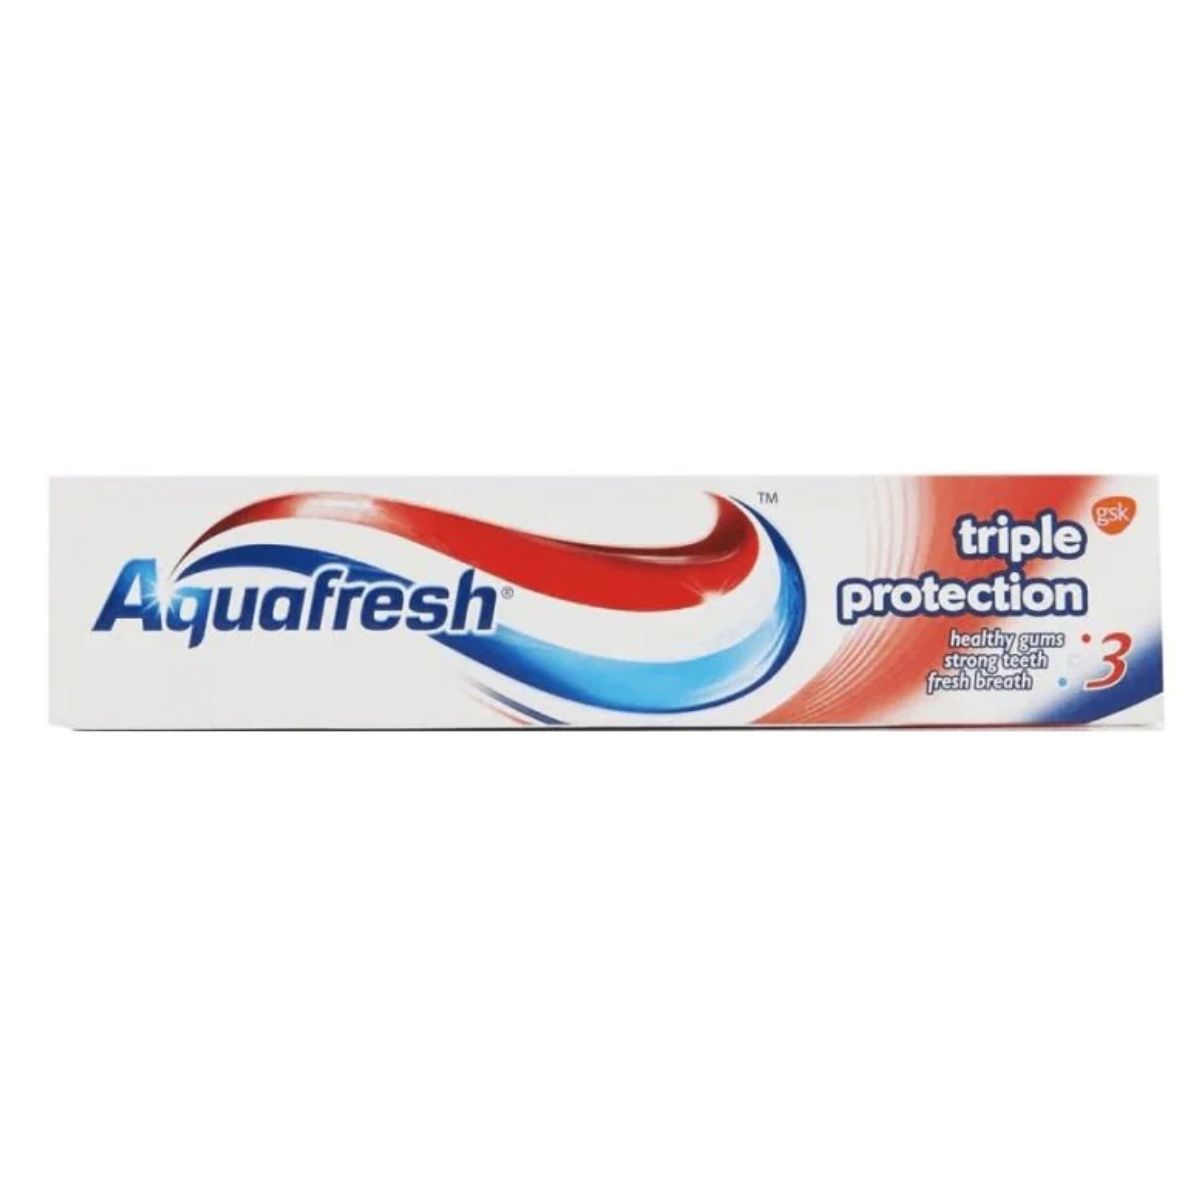 A tube of Aquafresh - Toothpaste - 100ml.